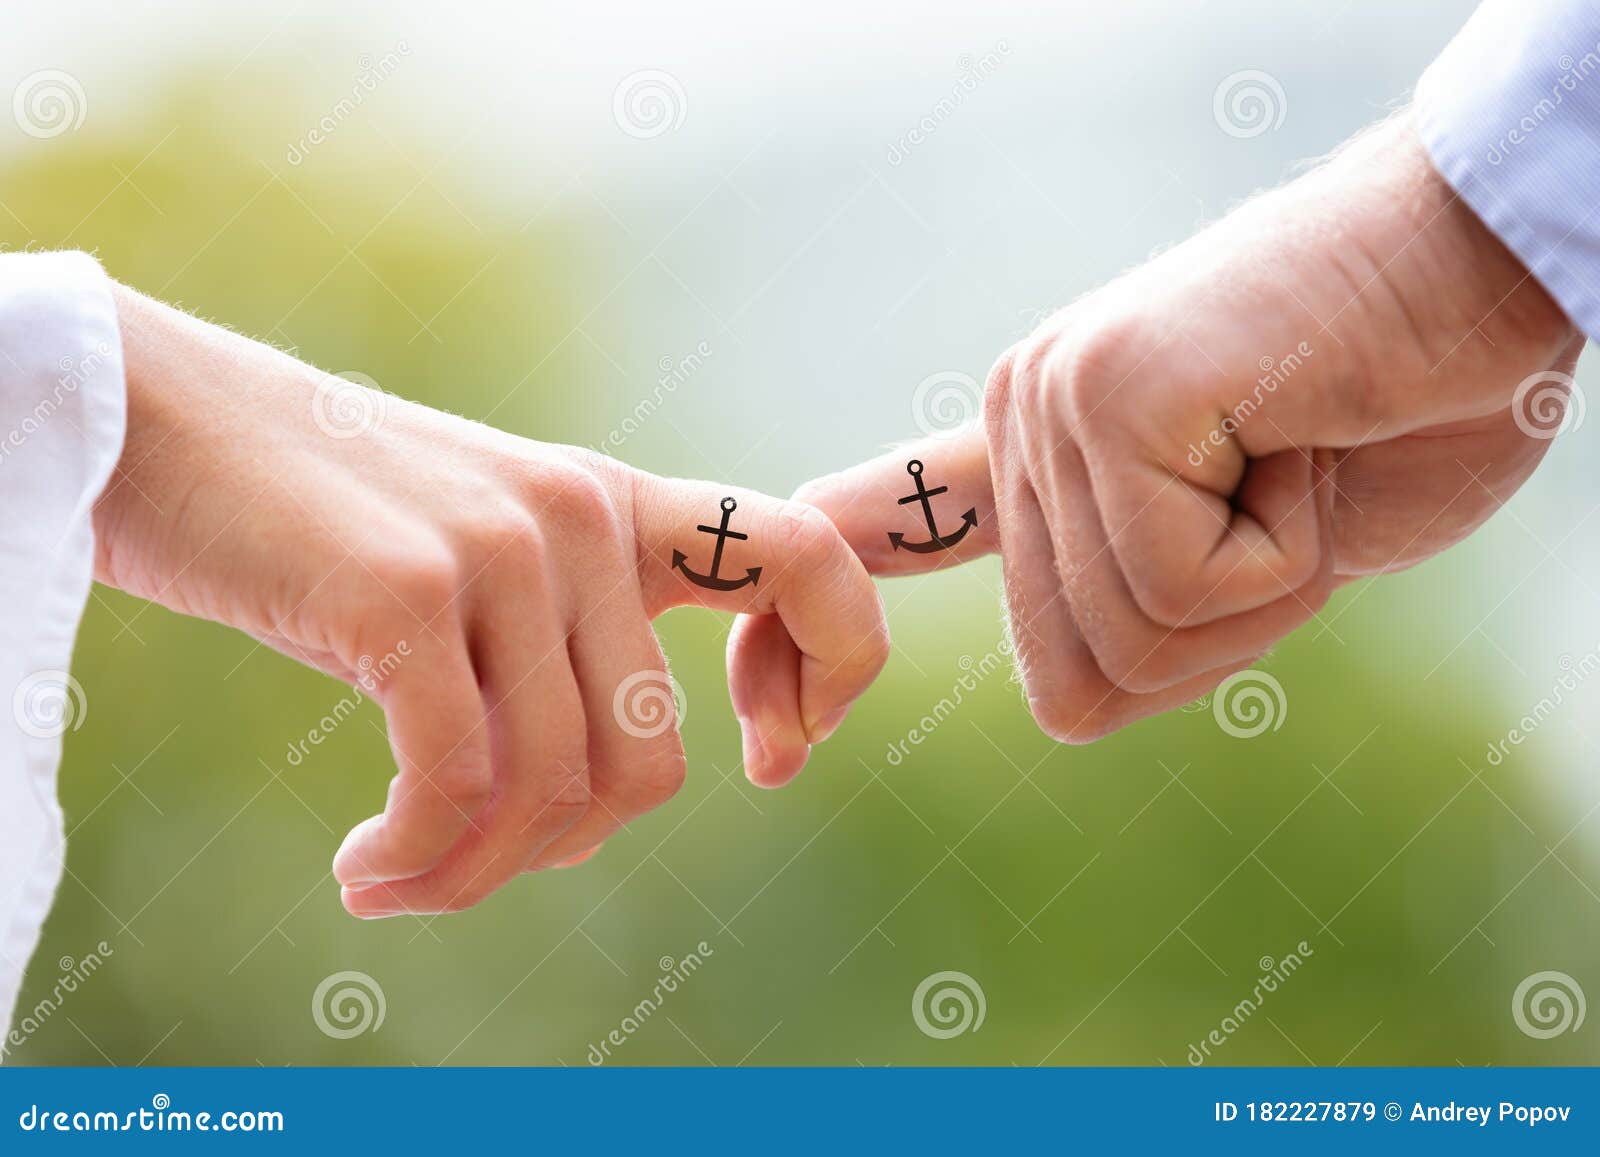 Anchor  Wheel Matching Tattoos For Couples In Love   httpbestpickrcommatchingcouplestatt  Matching tattoos Tattoos  with meaning Couples tattoo designs